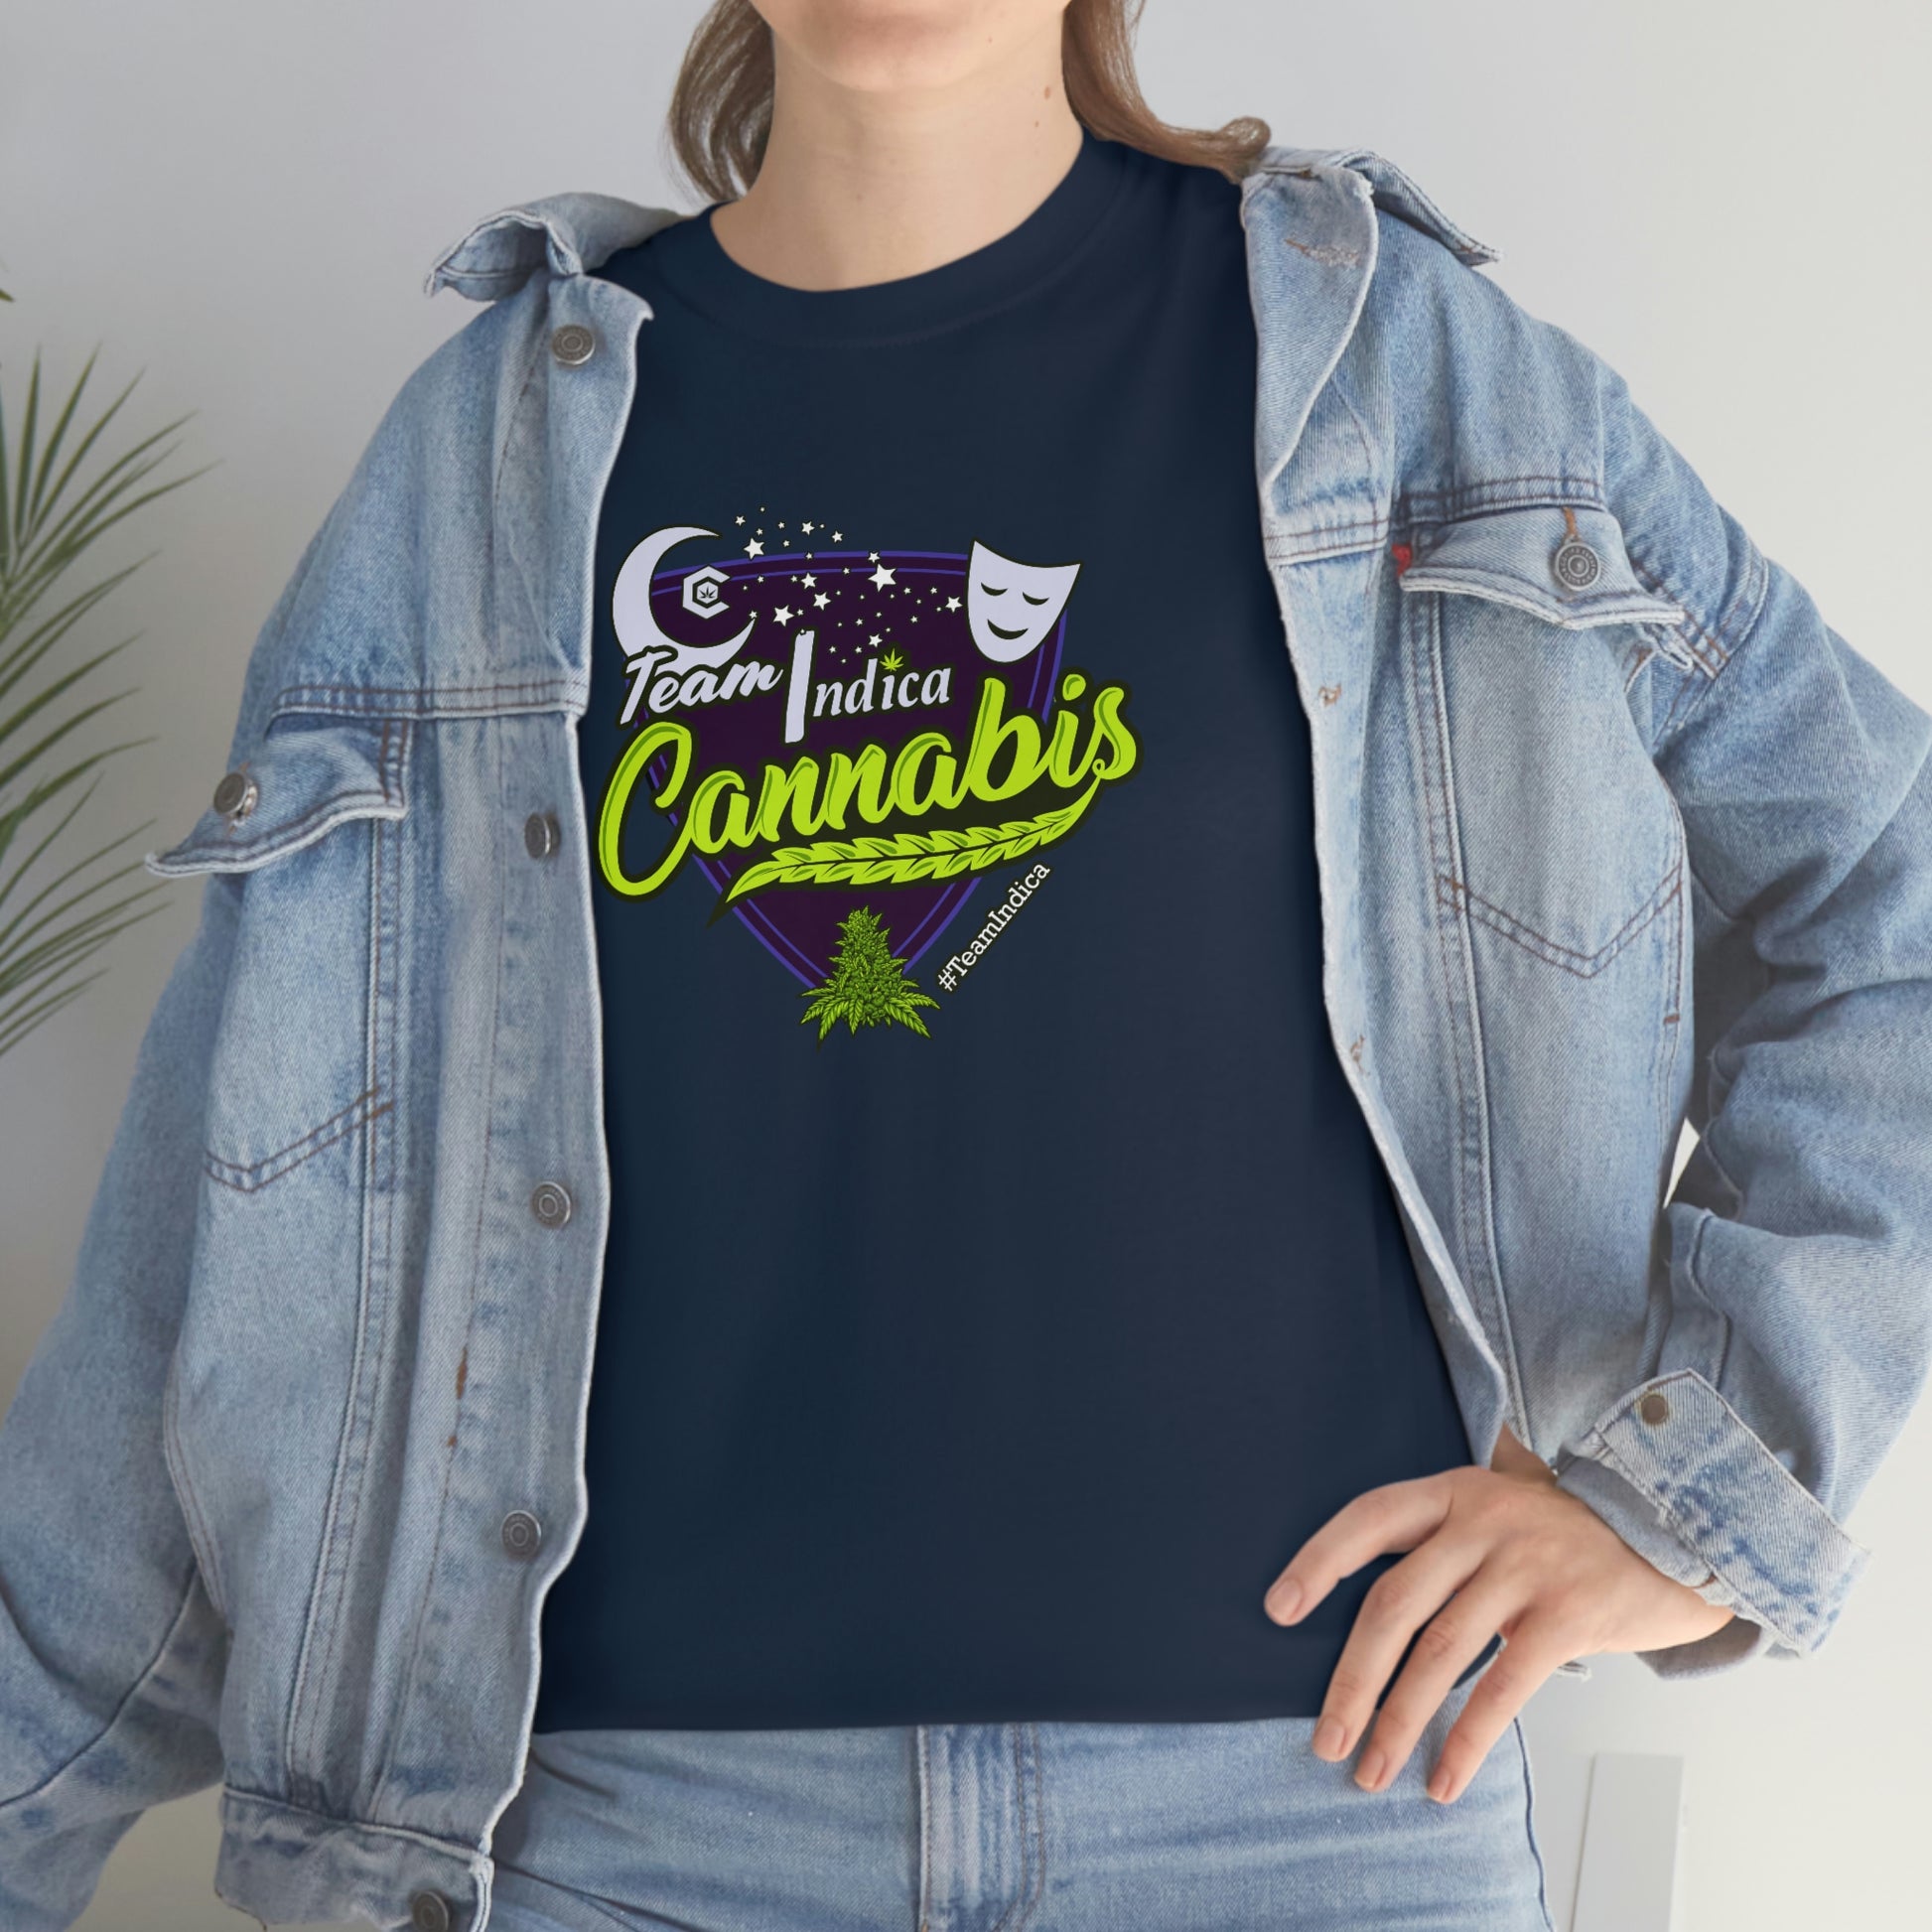 a woman wearing a denim jacket and a Team Indica Cannabis T-Shirt